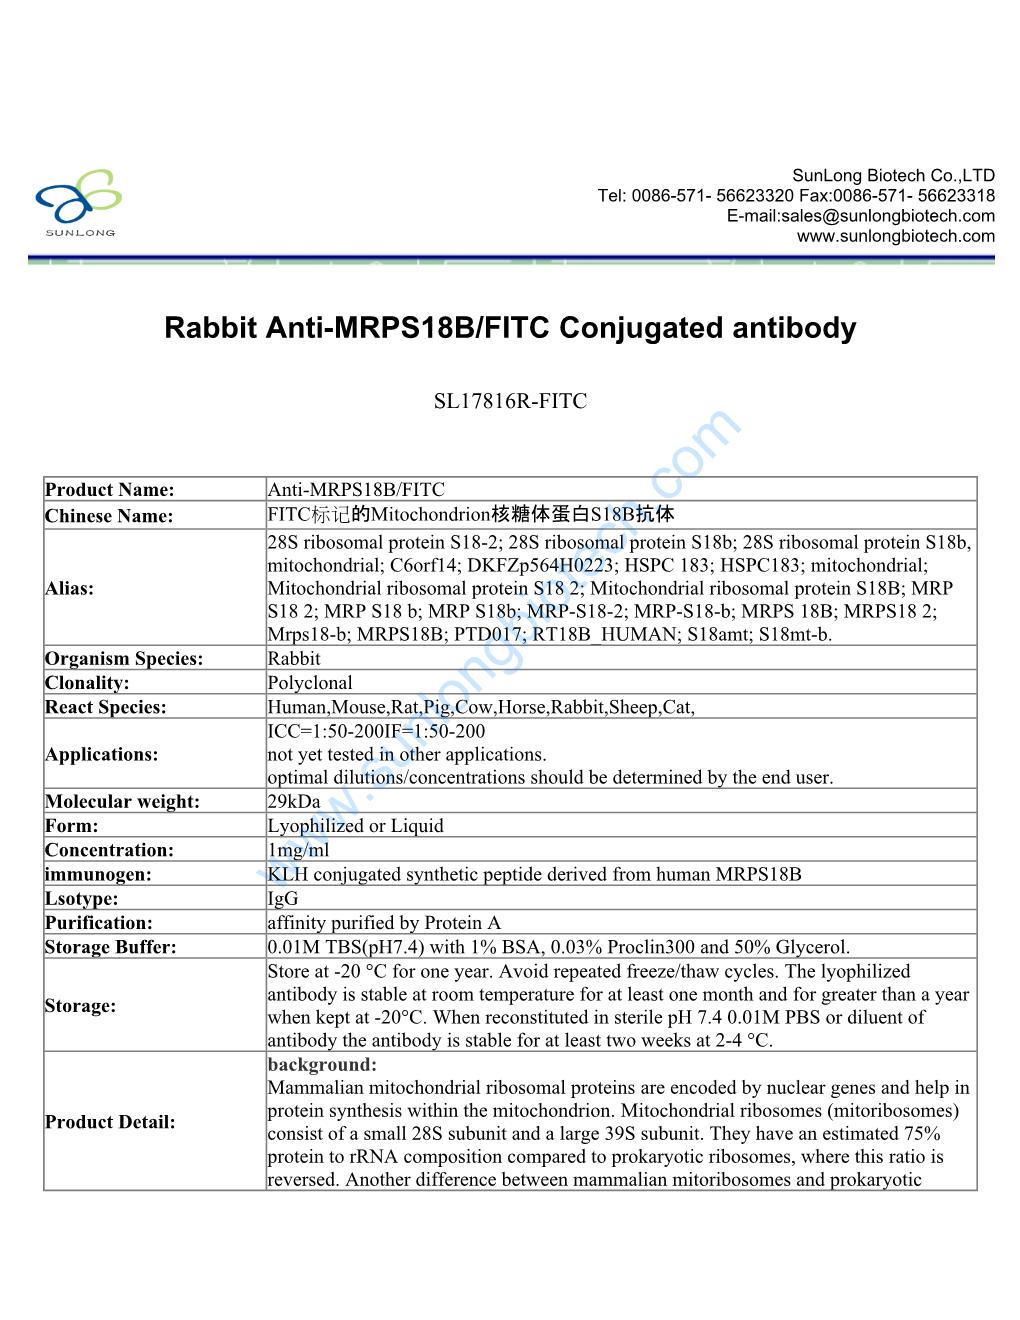 Rabbit Anti-MRPS18B/FITC Conjugated Antibody-SL17816R